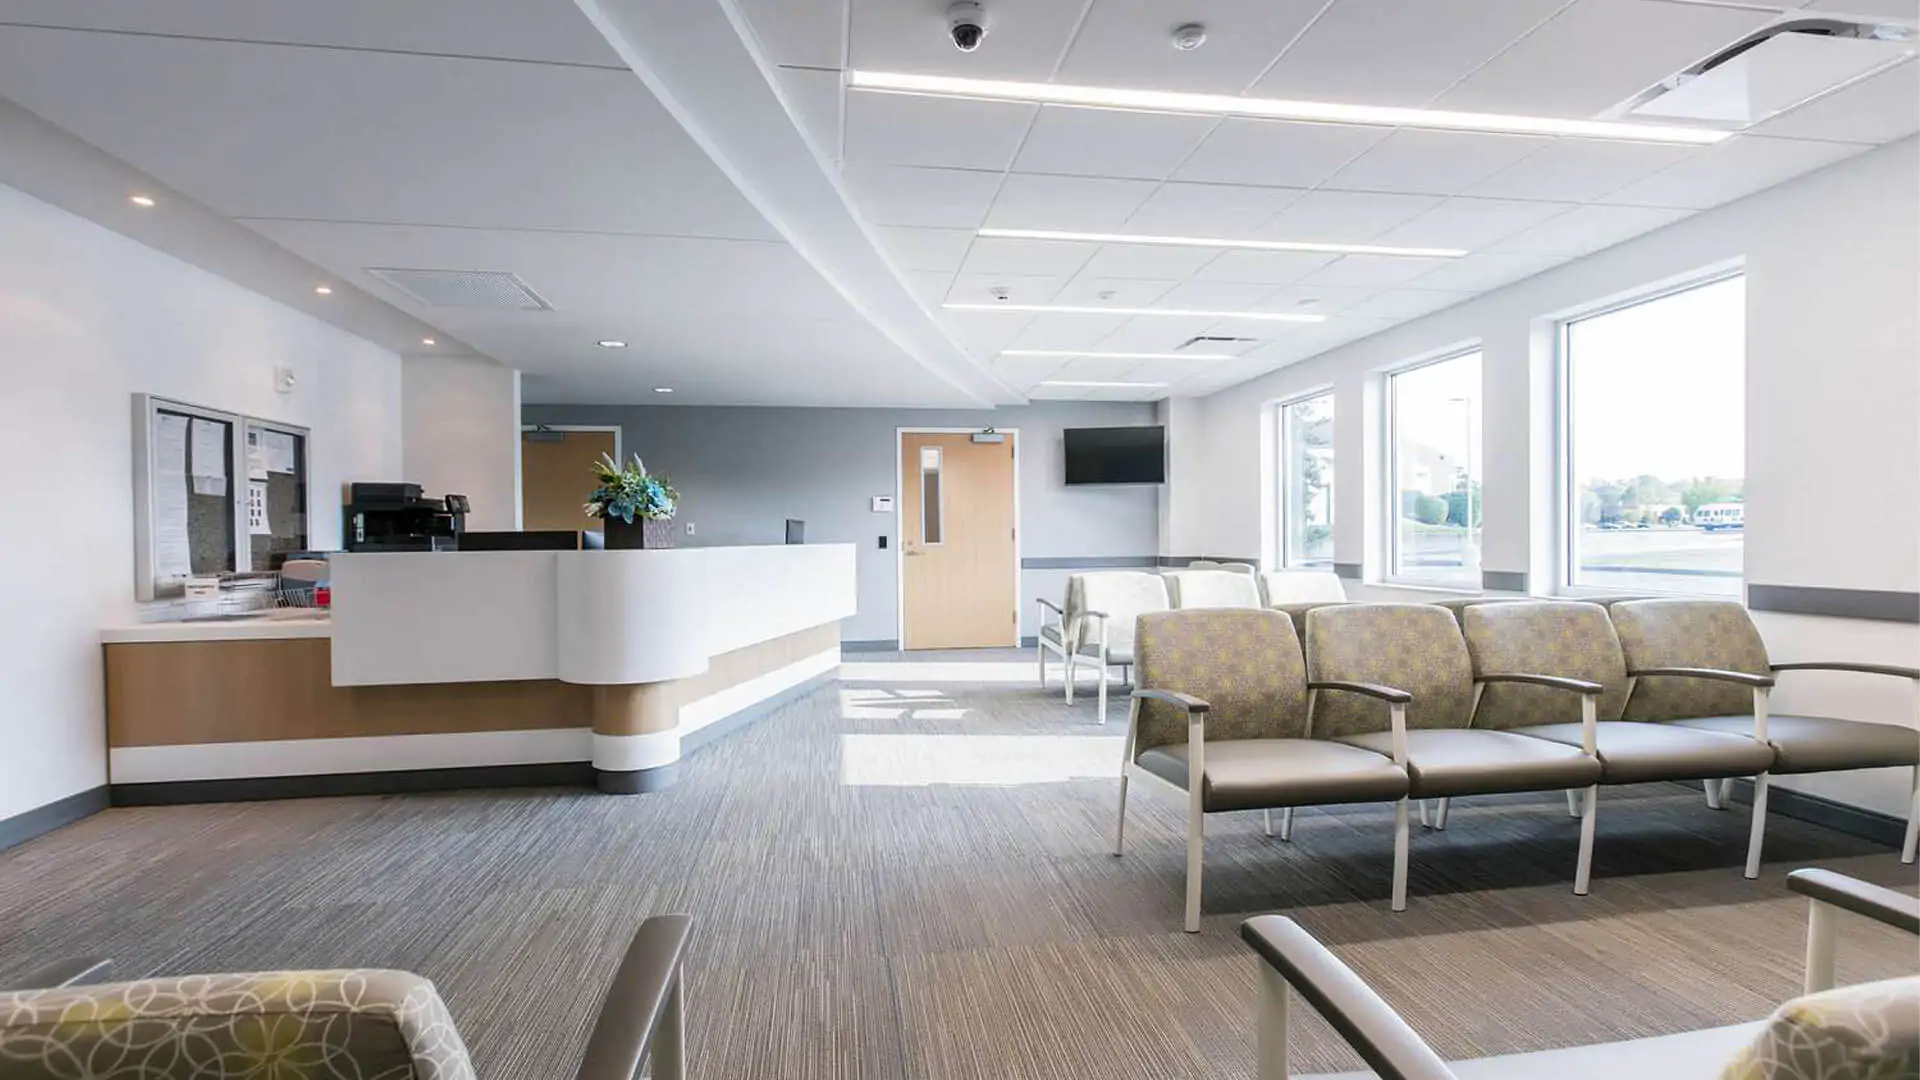 Diagnostic Center Interior Design (7)